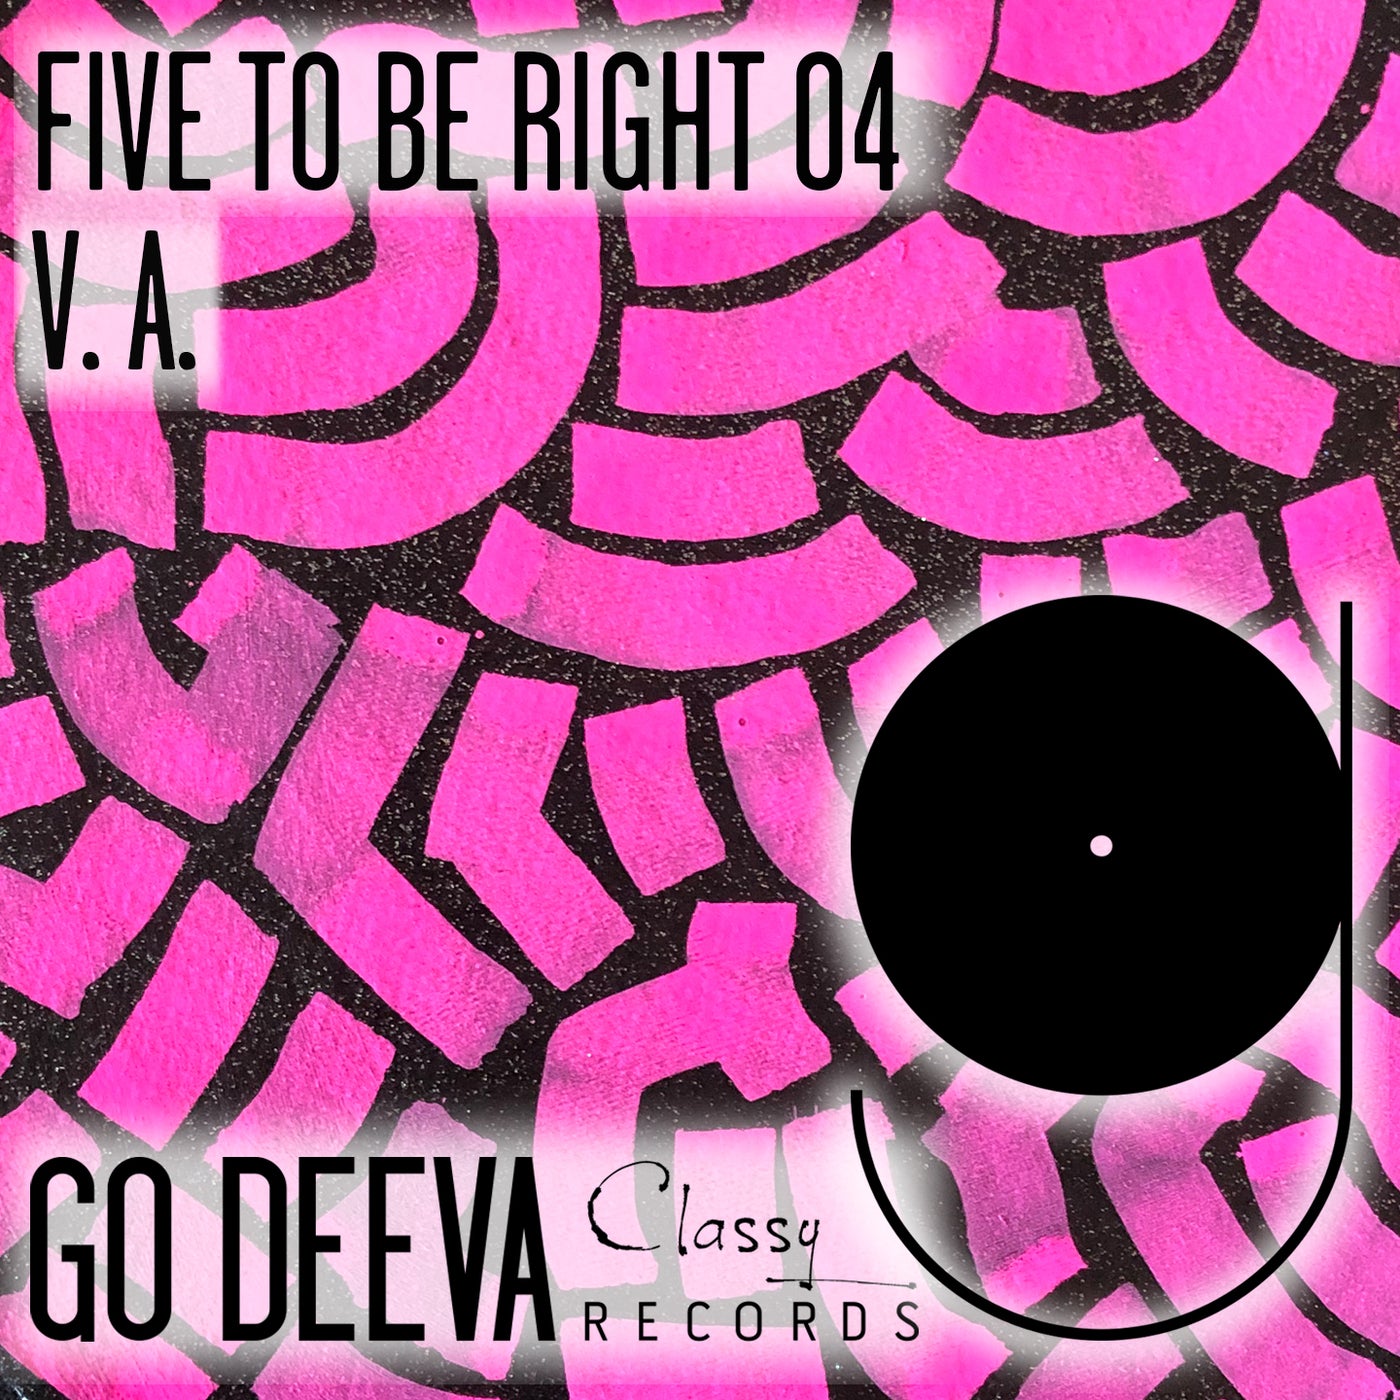 image cover: VA - FIVE TO BE RIGHT 04 / GDC073